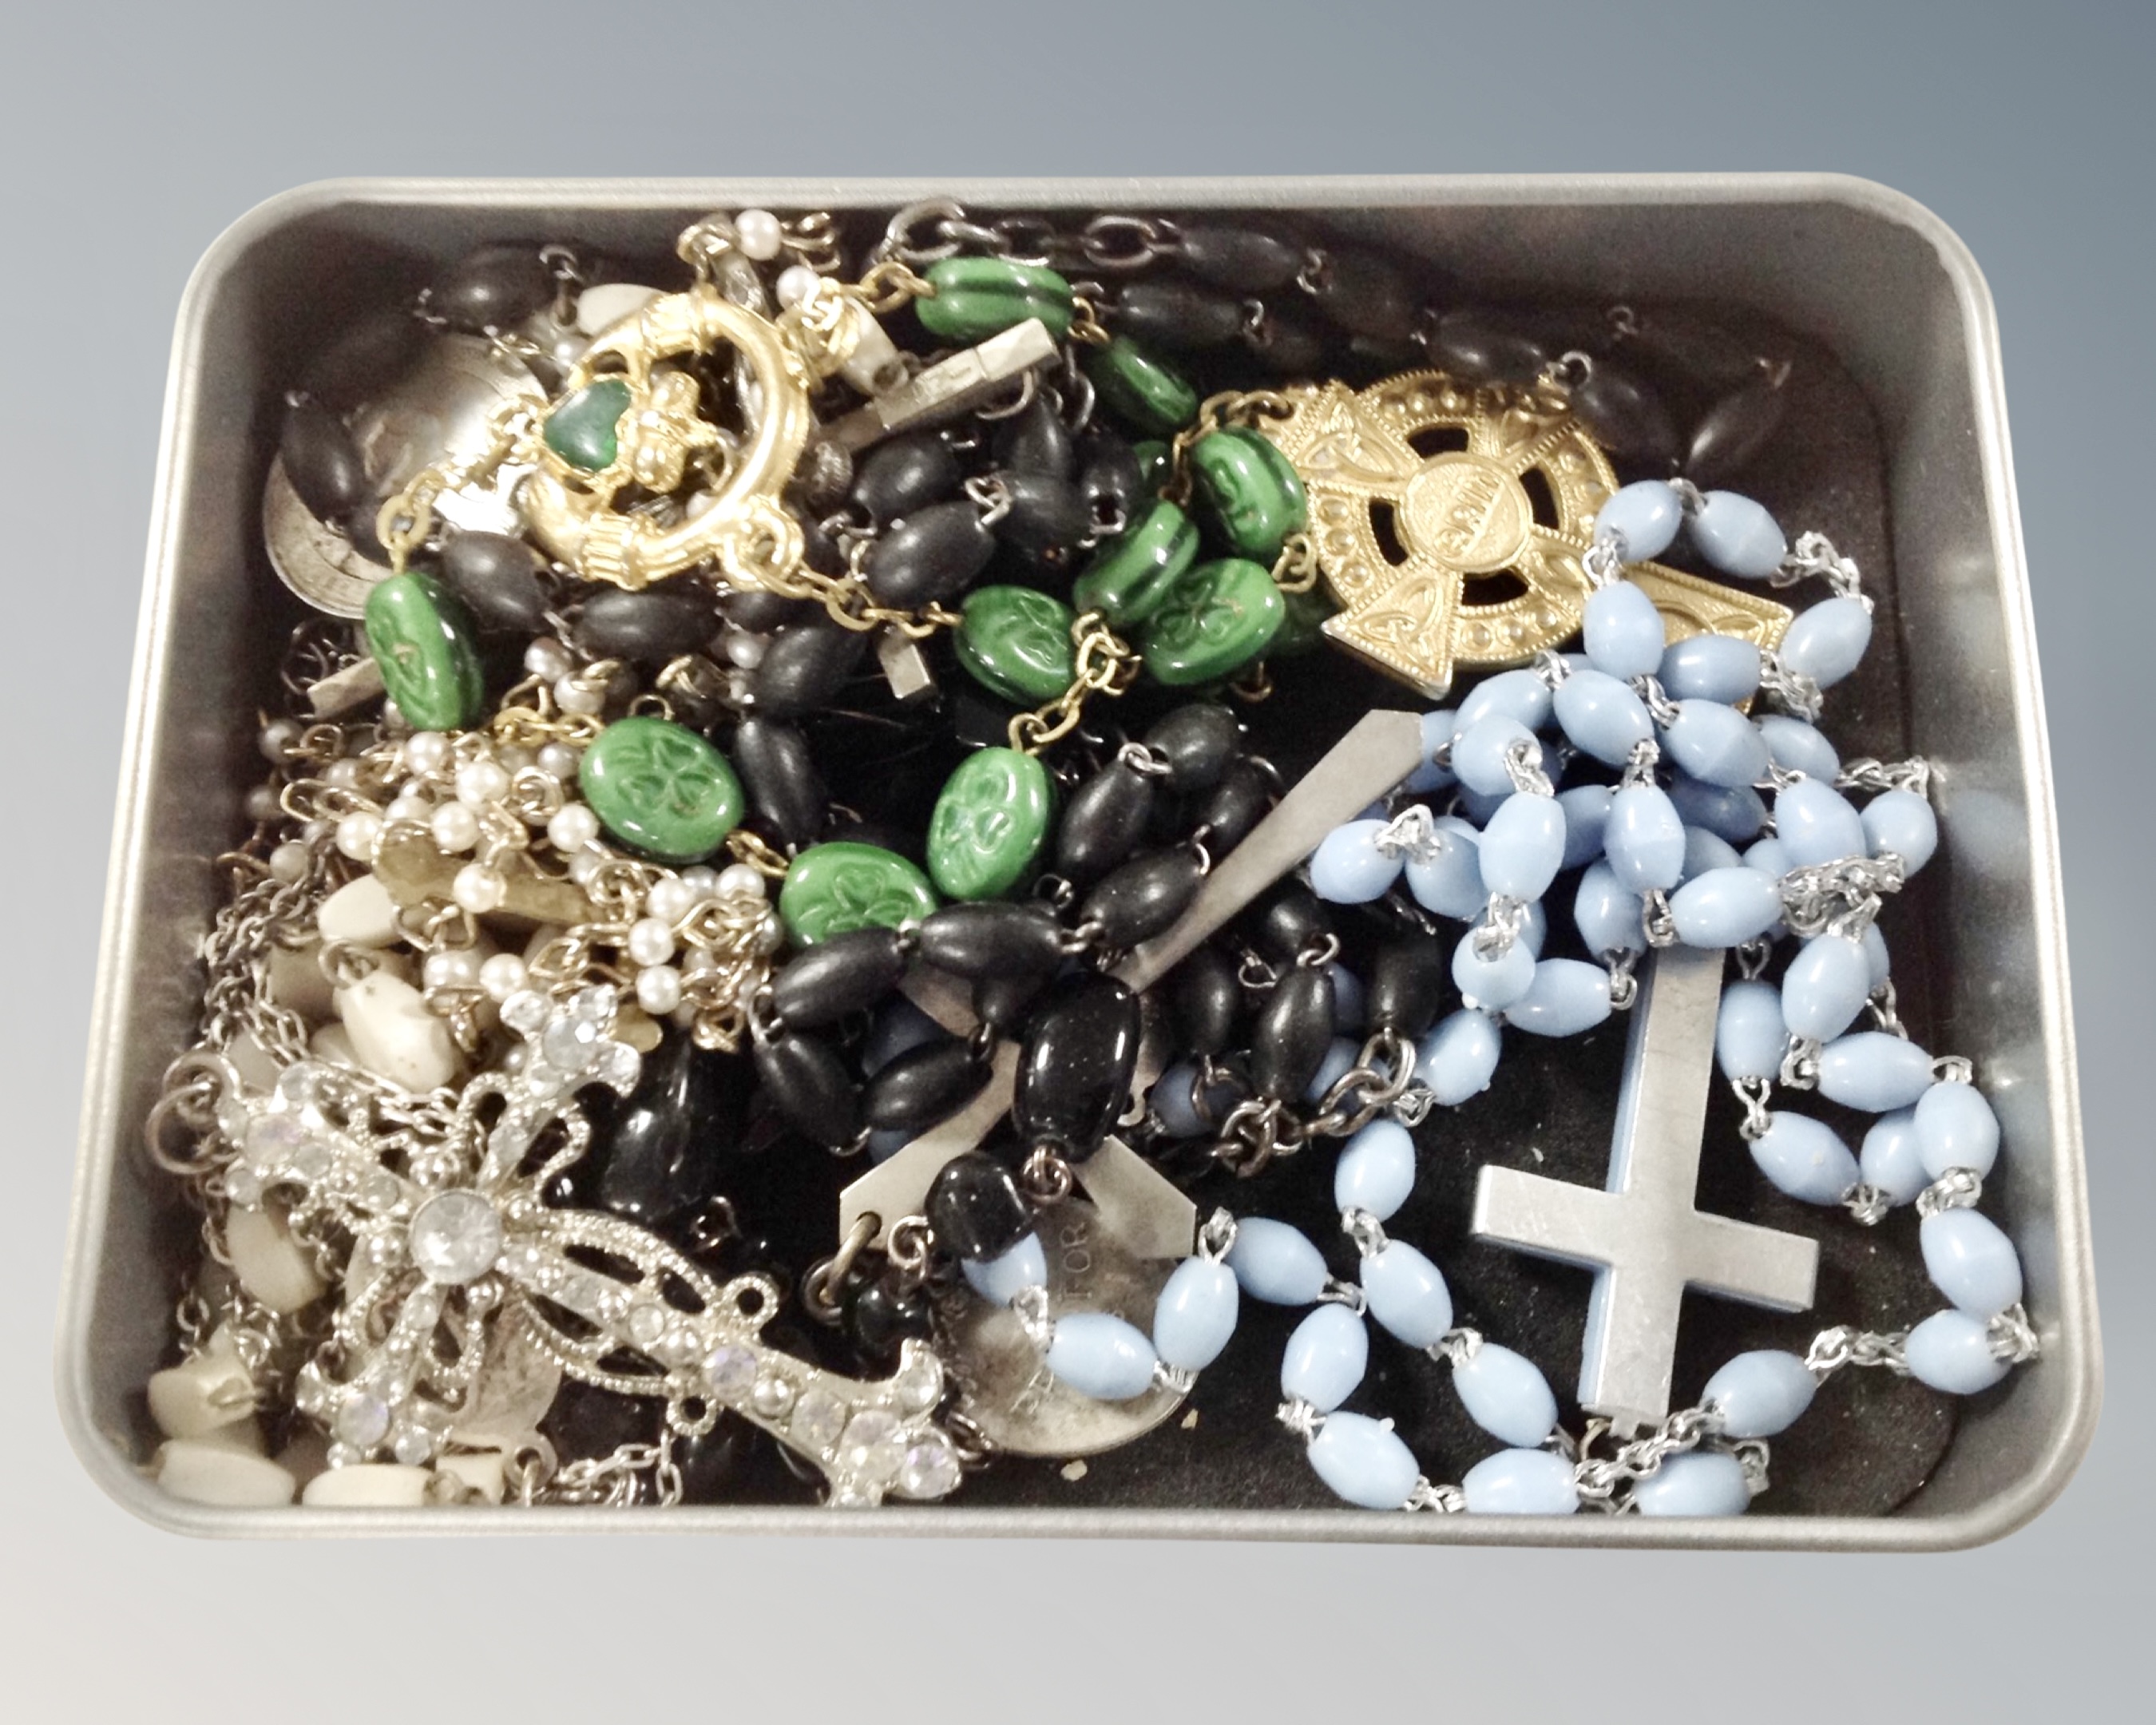 A small tin of prayer beads